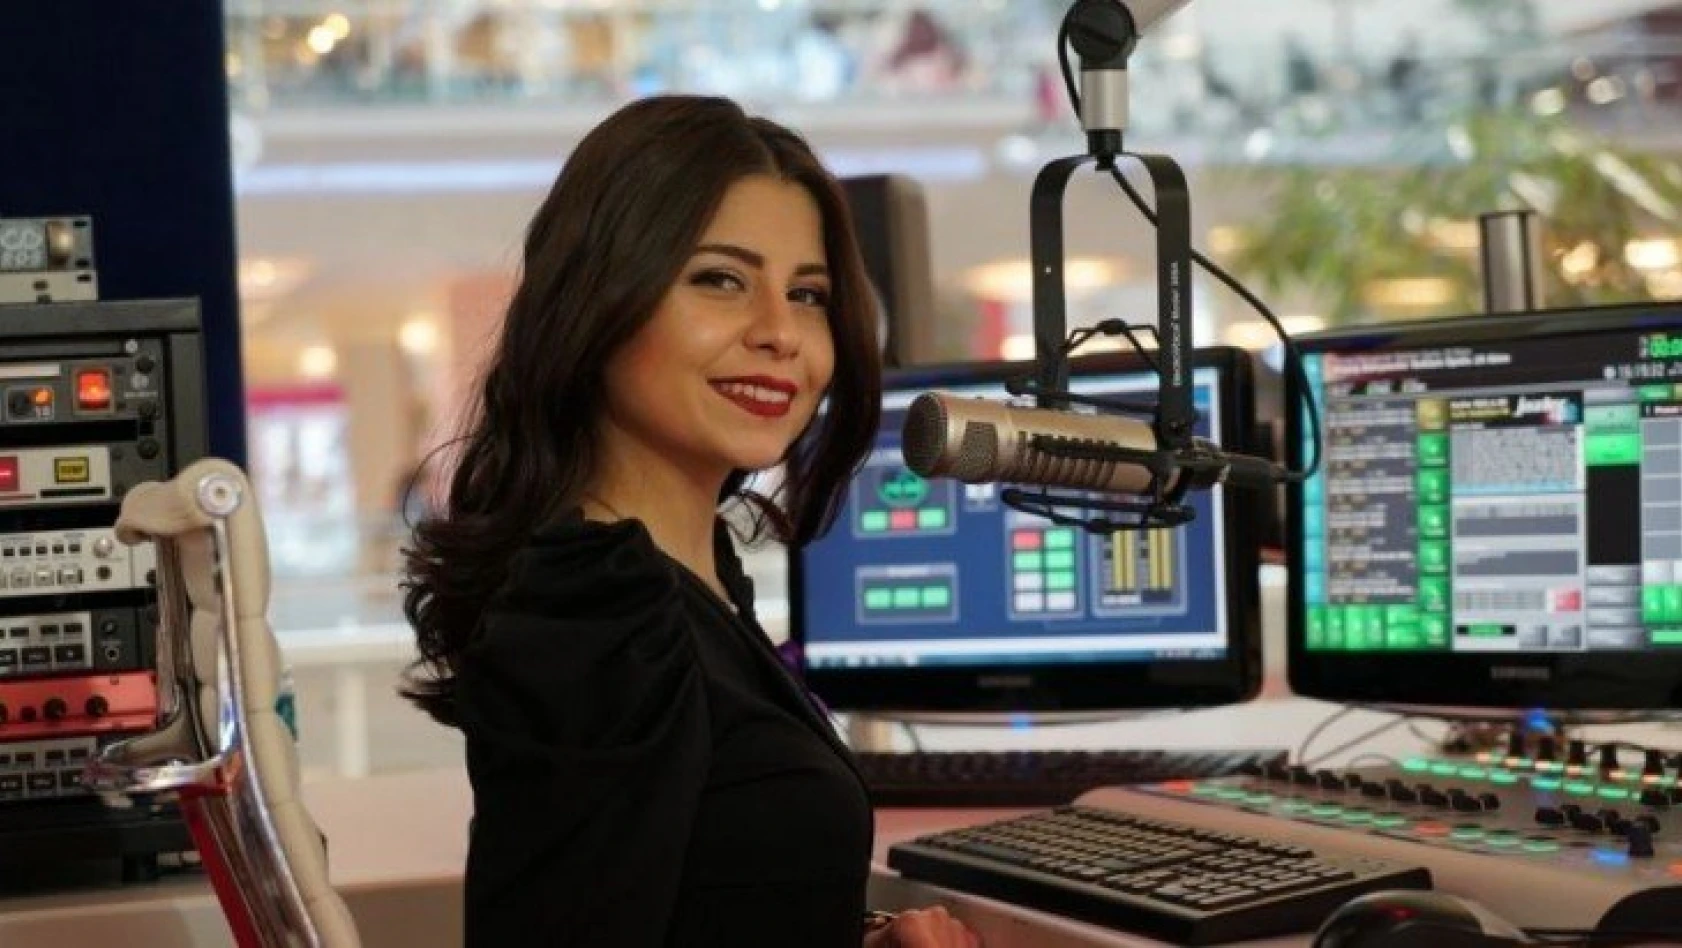 Radyo Trend Gebze Center AVM Stüdyosu açıldı